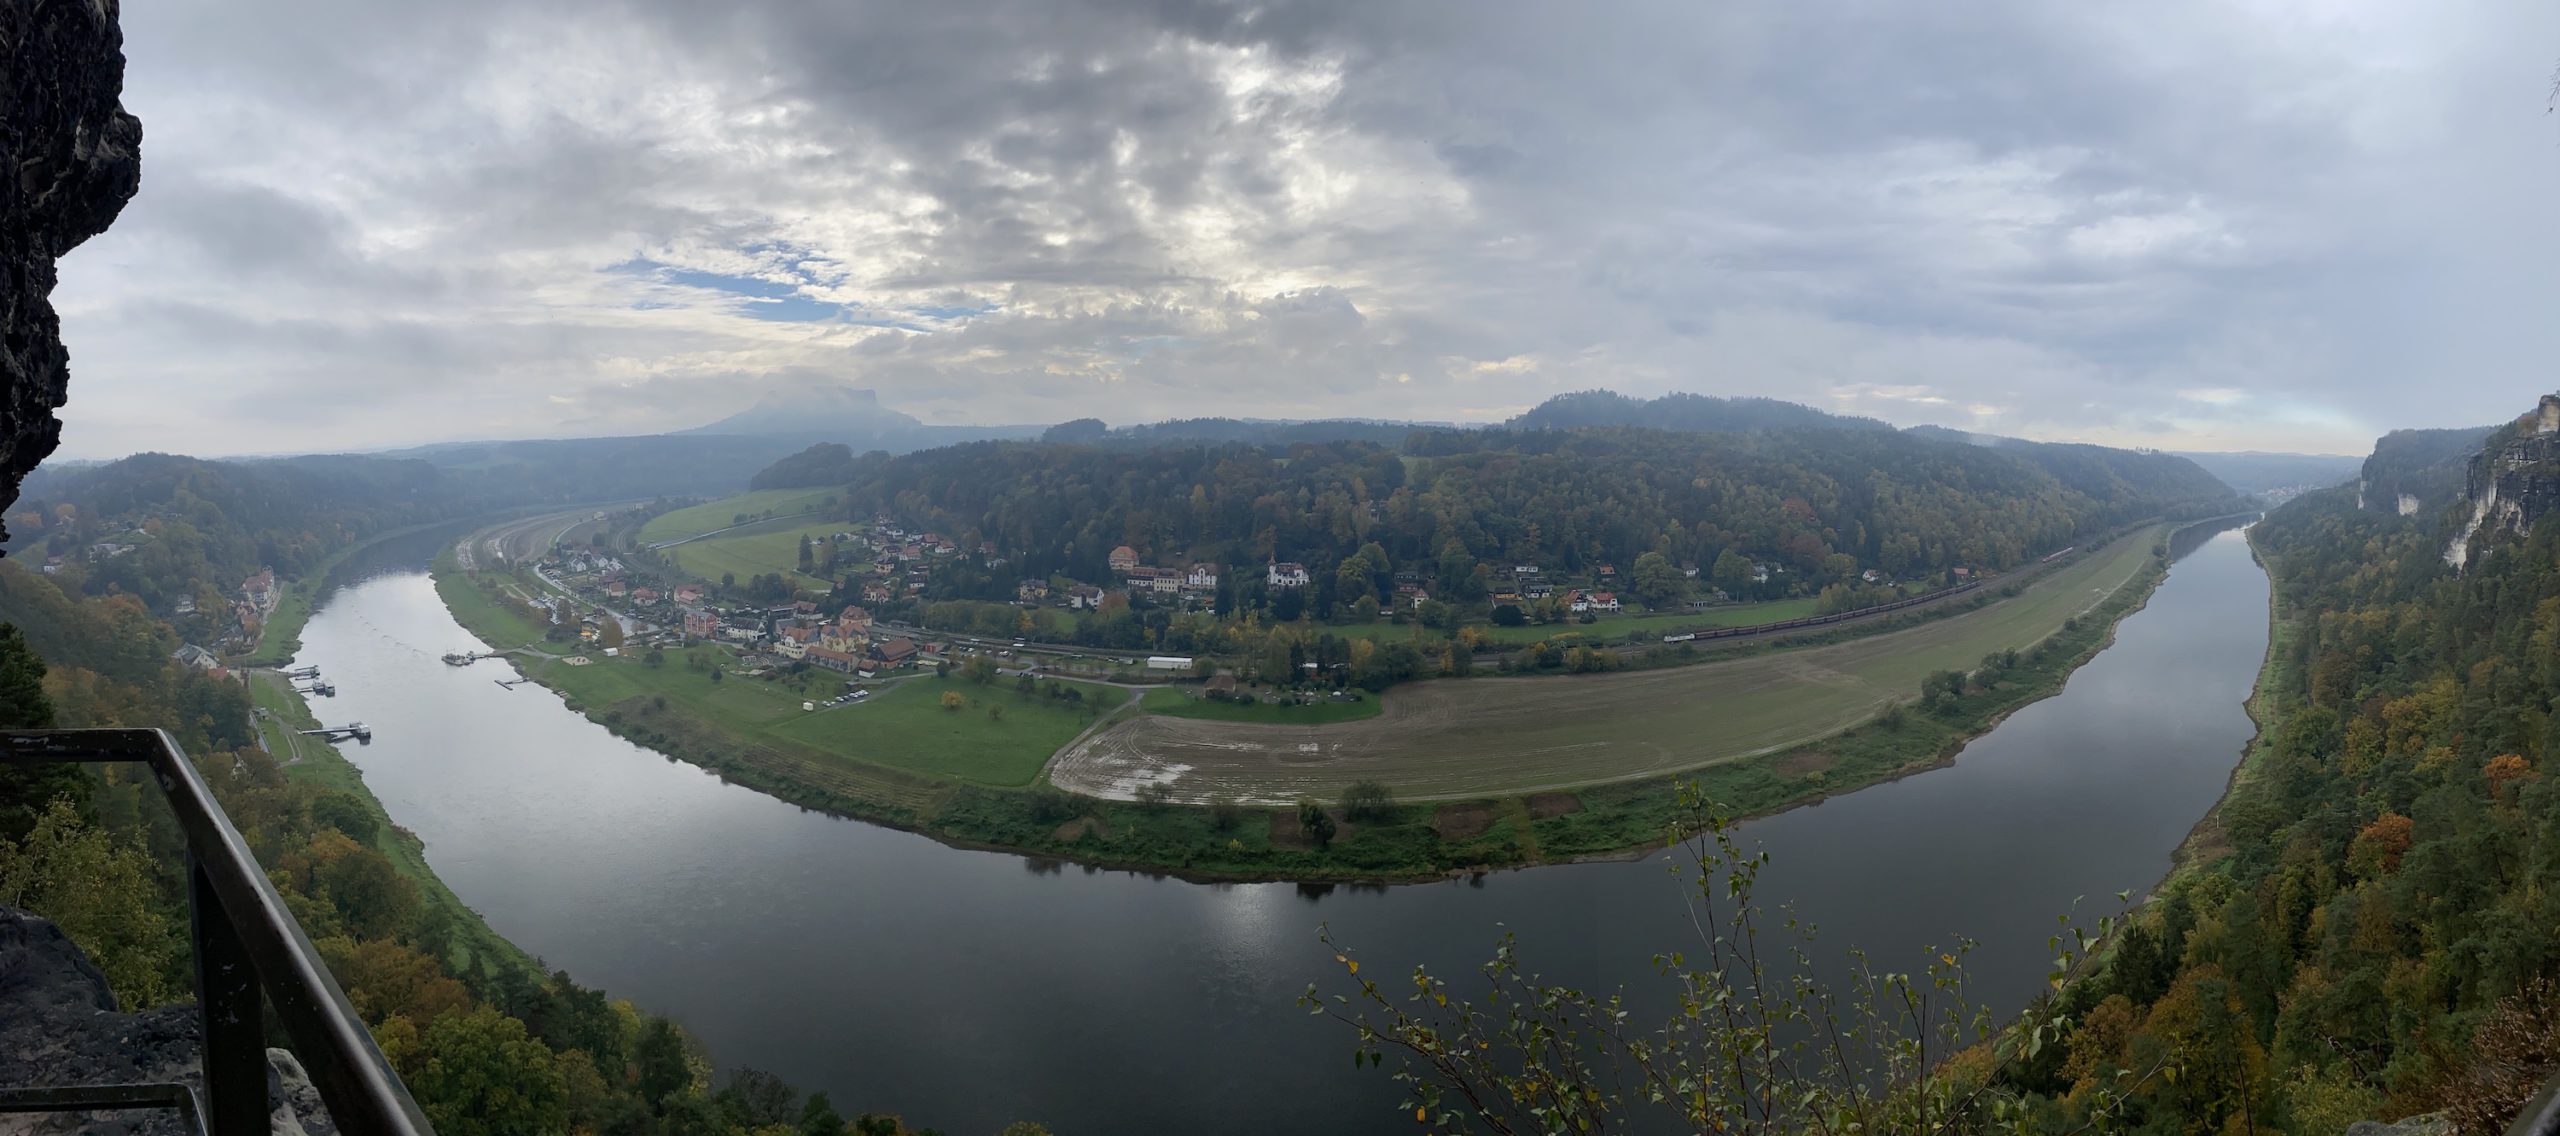 Panorama from the Tiedgestein